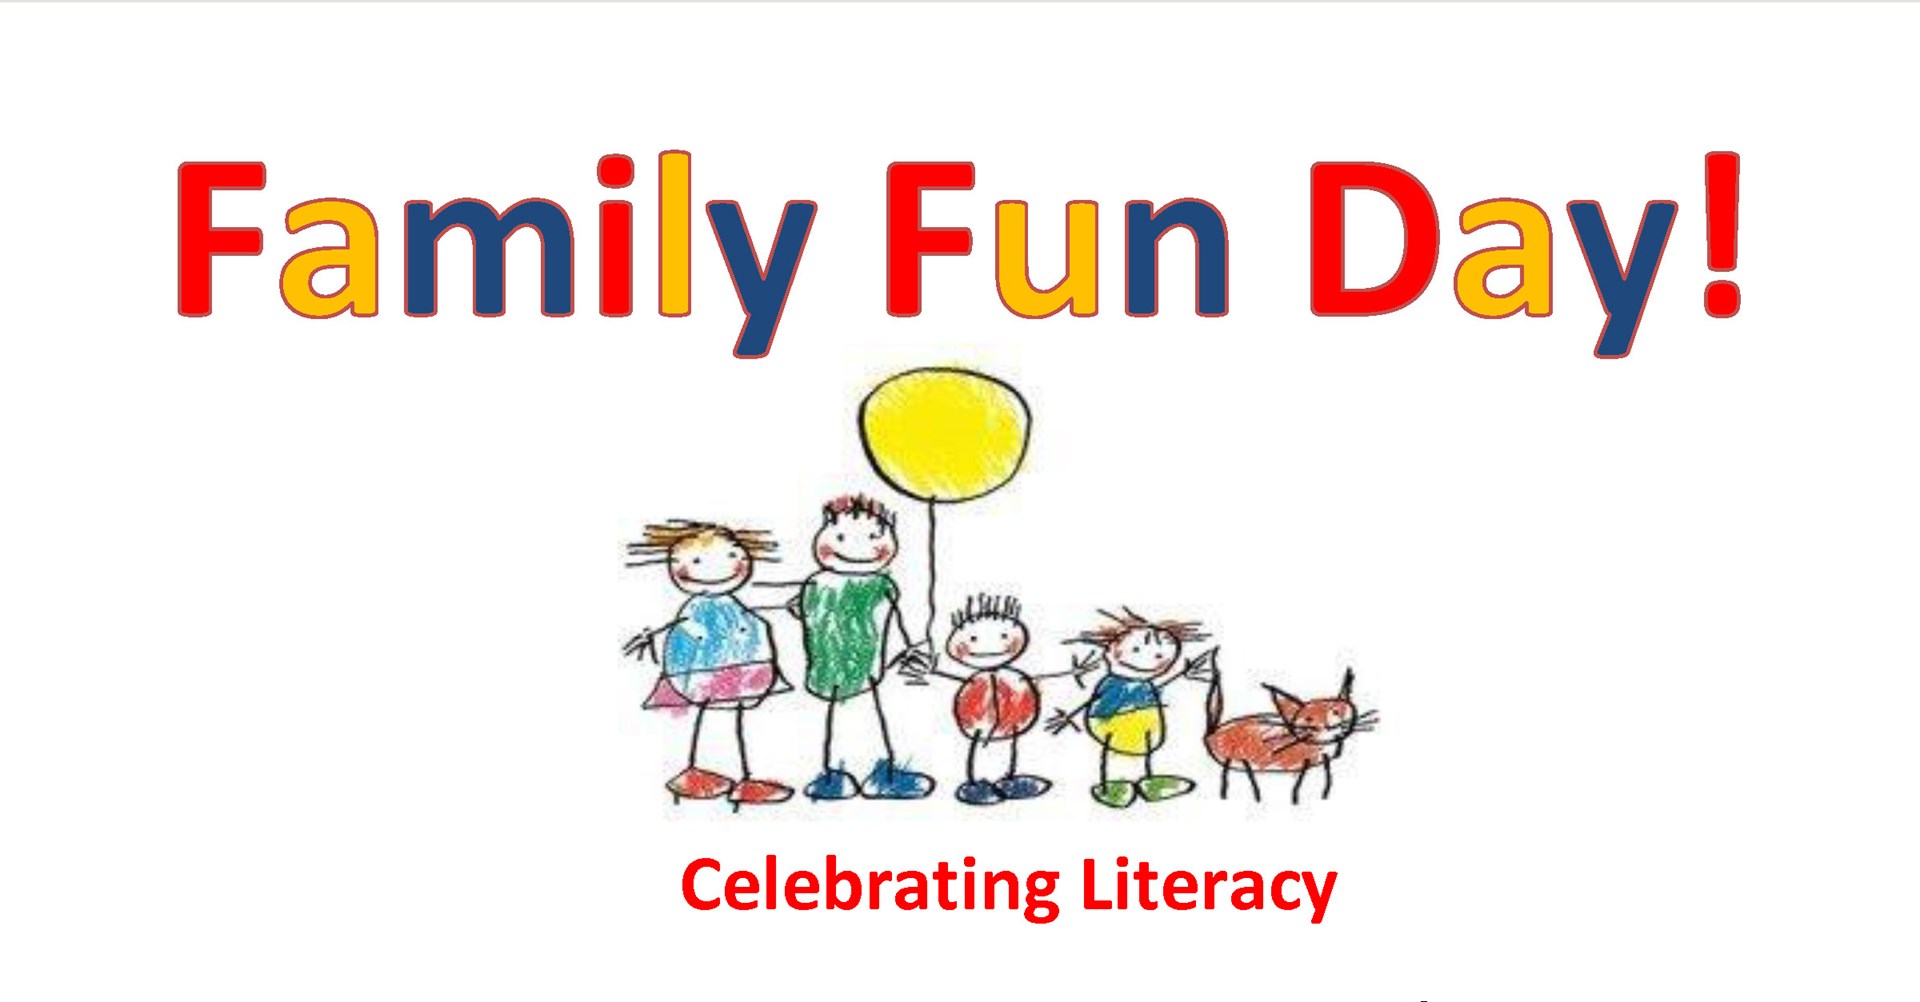 Family Fun Day Literacy poster 2019 Leader.jpg